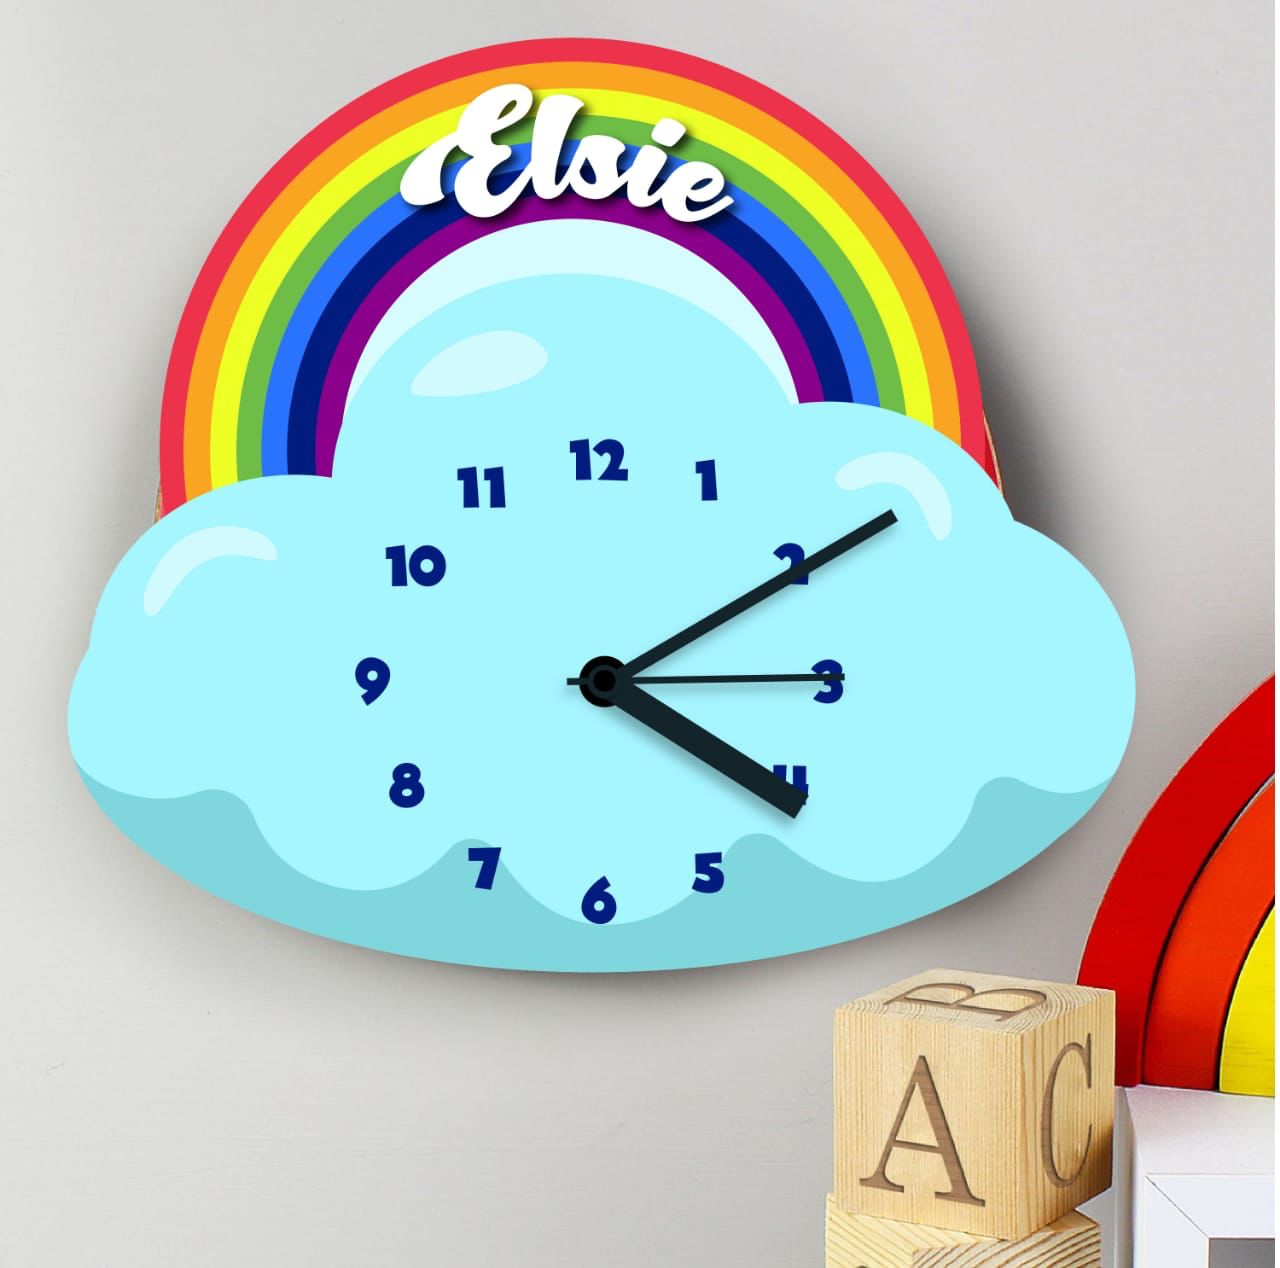 Kids customized cartoon clock in cloud and rainbow shape on a wall